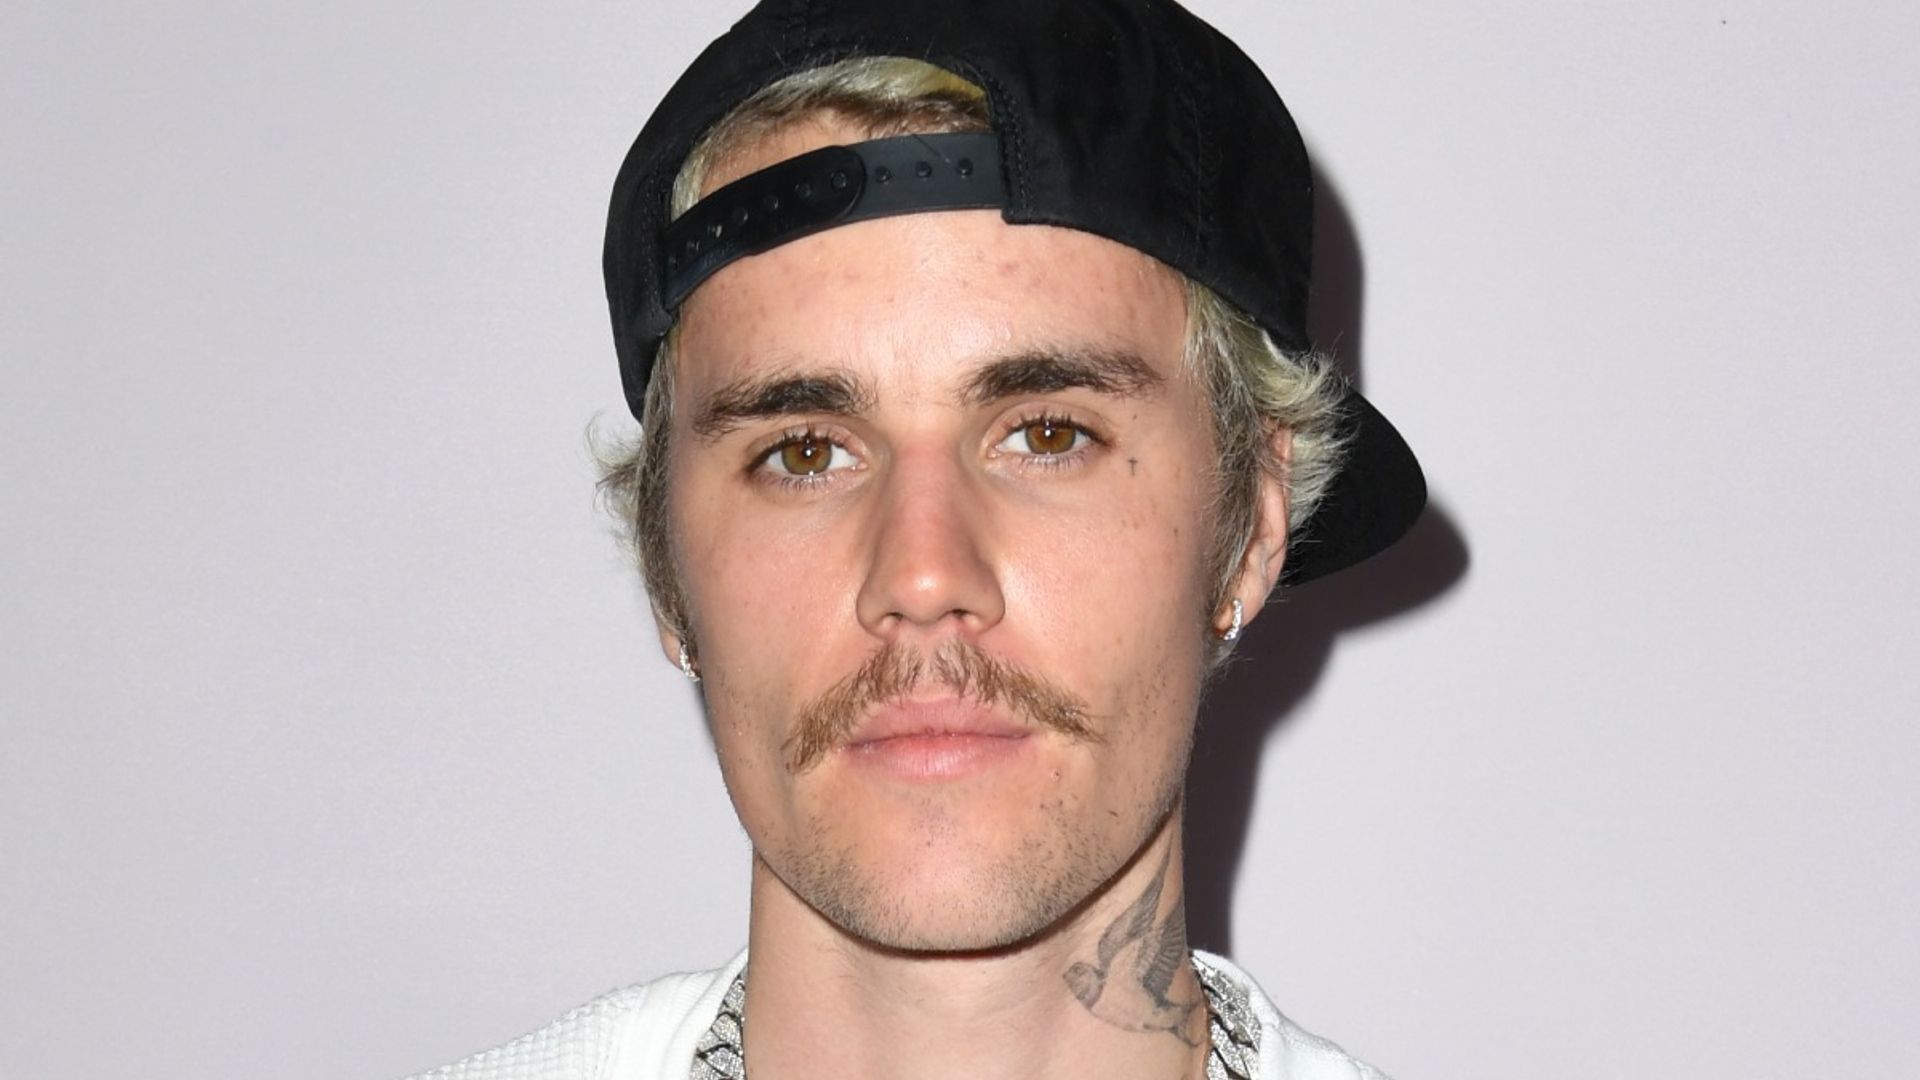 Justin Bieber shares shocking health update with fans after canceling